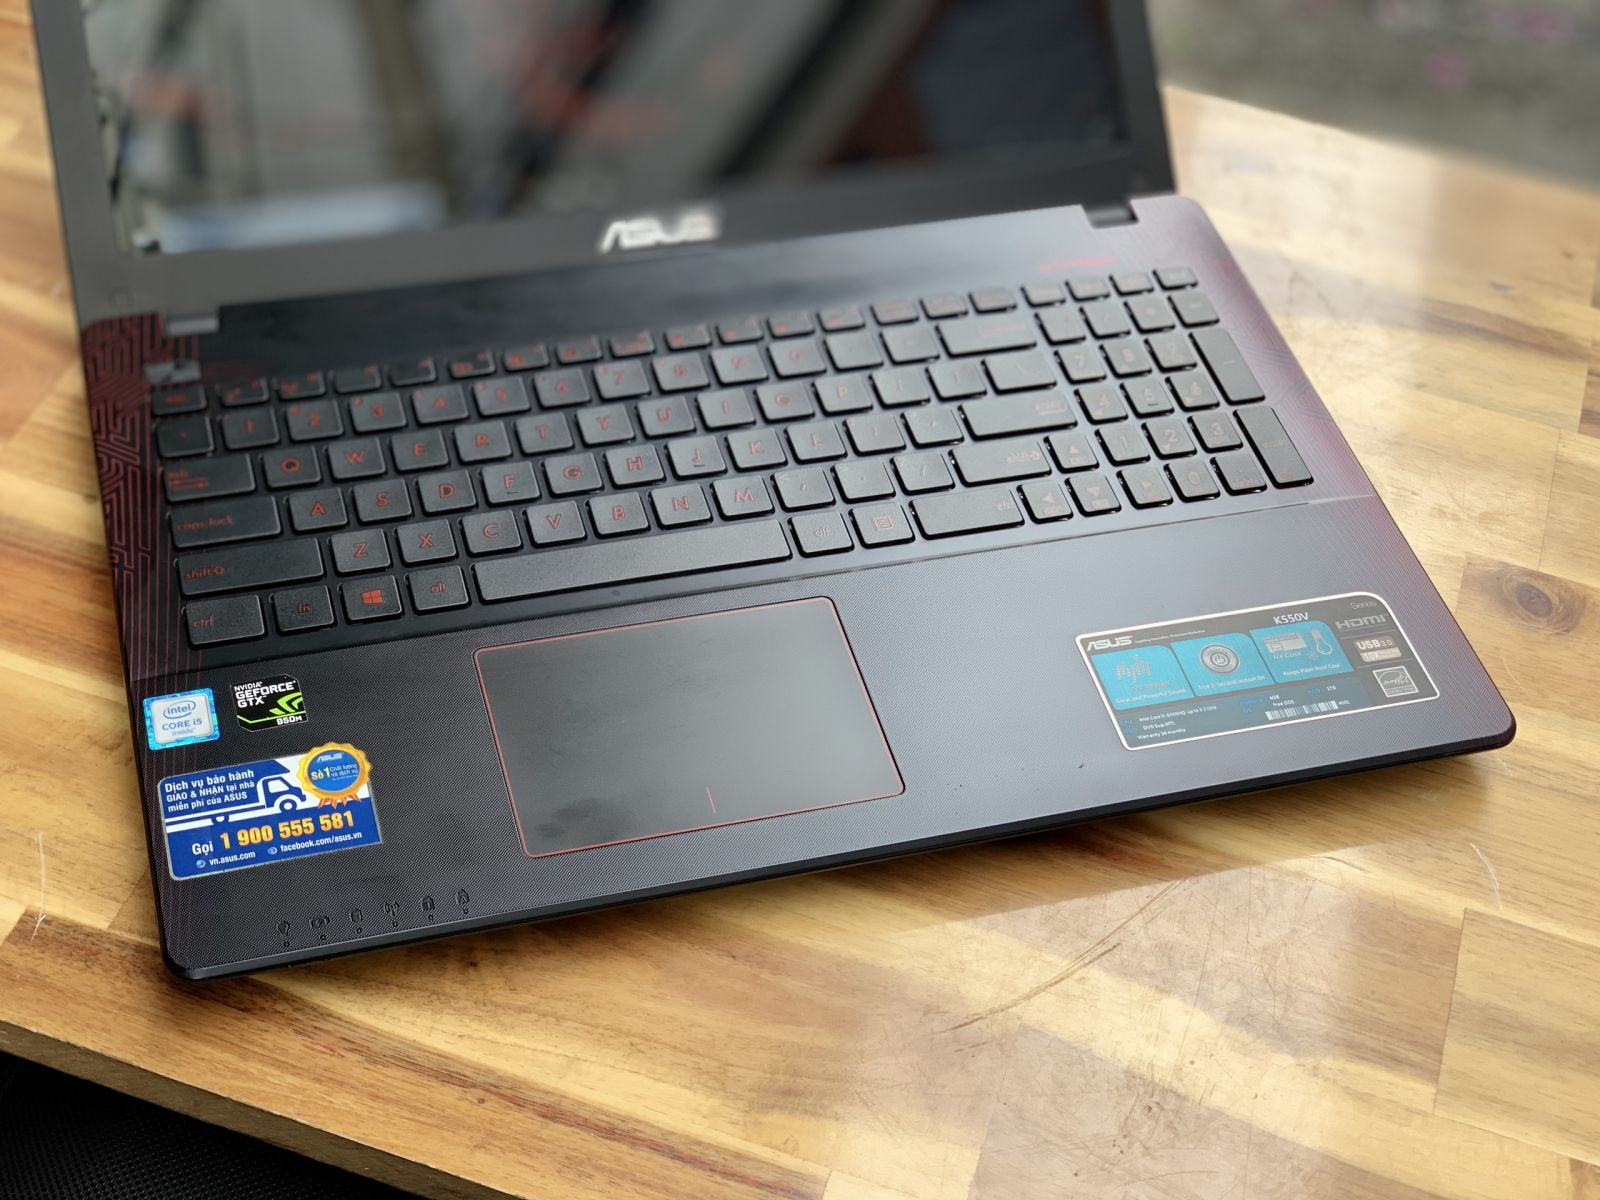 Laptop Asus K550V, i5 6300HQ 4G 1000G Vga GTX950M Đẹp zin 100% Giá rẻ - 4